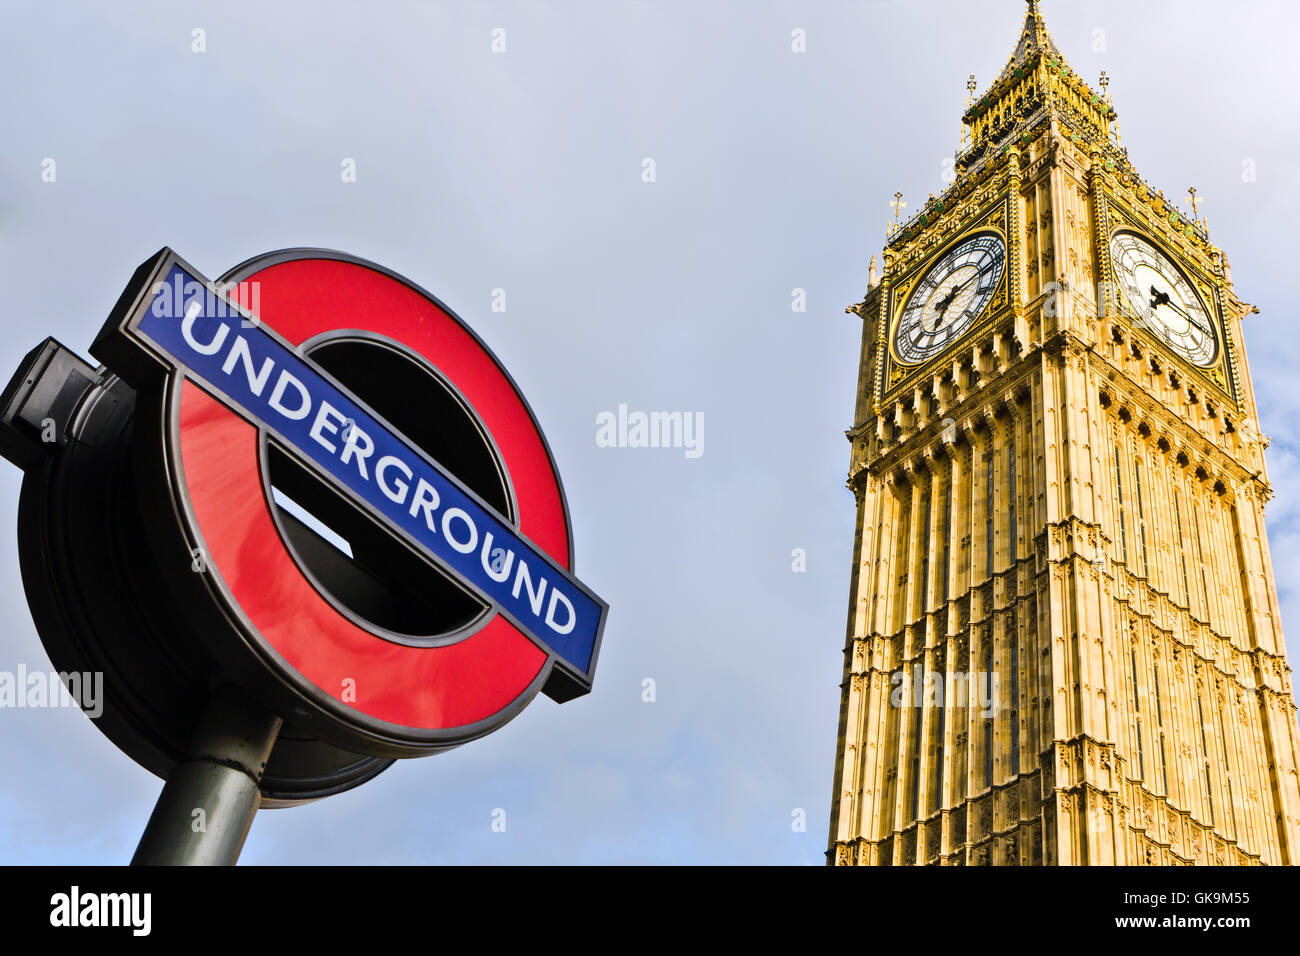 london big ben with underground sign Stock Photo